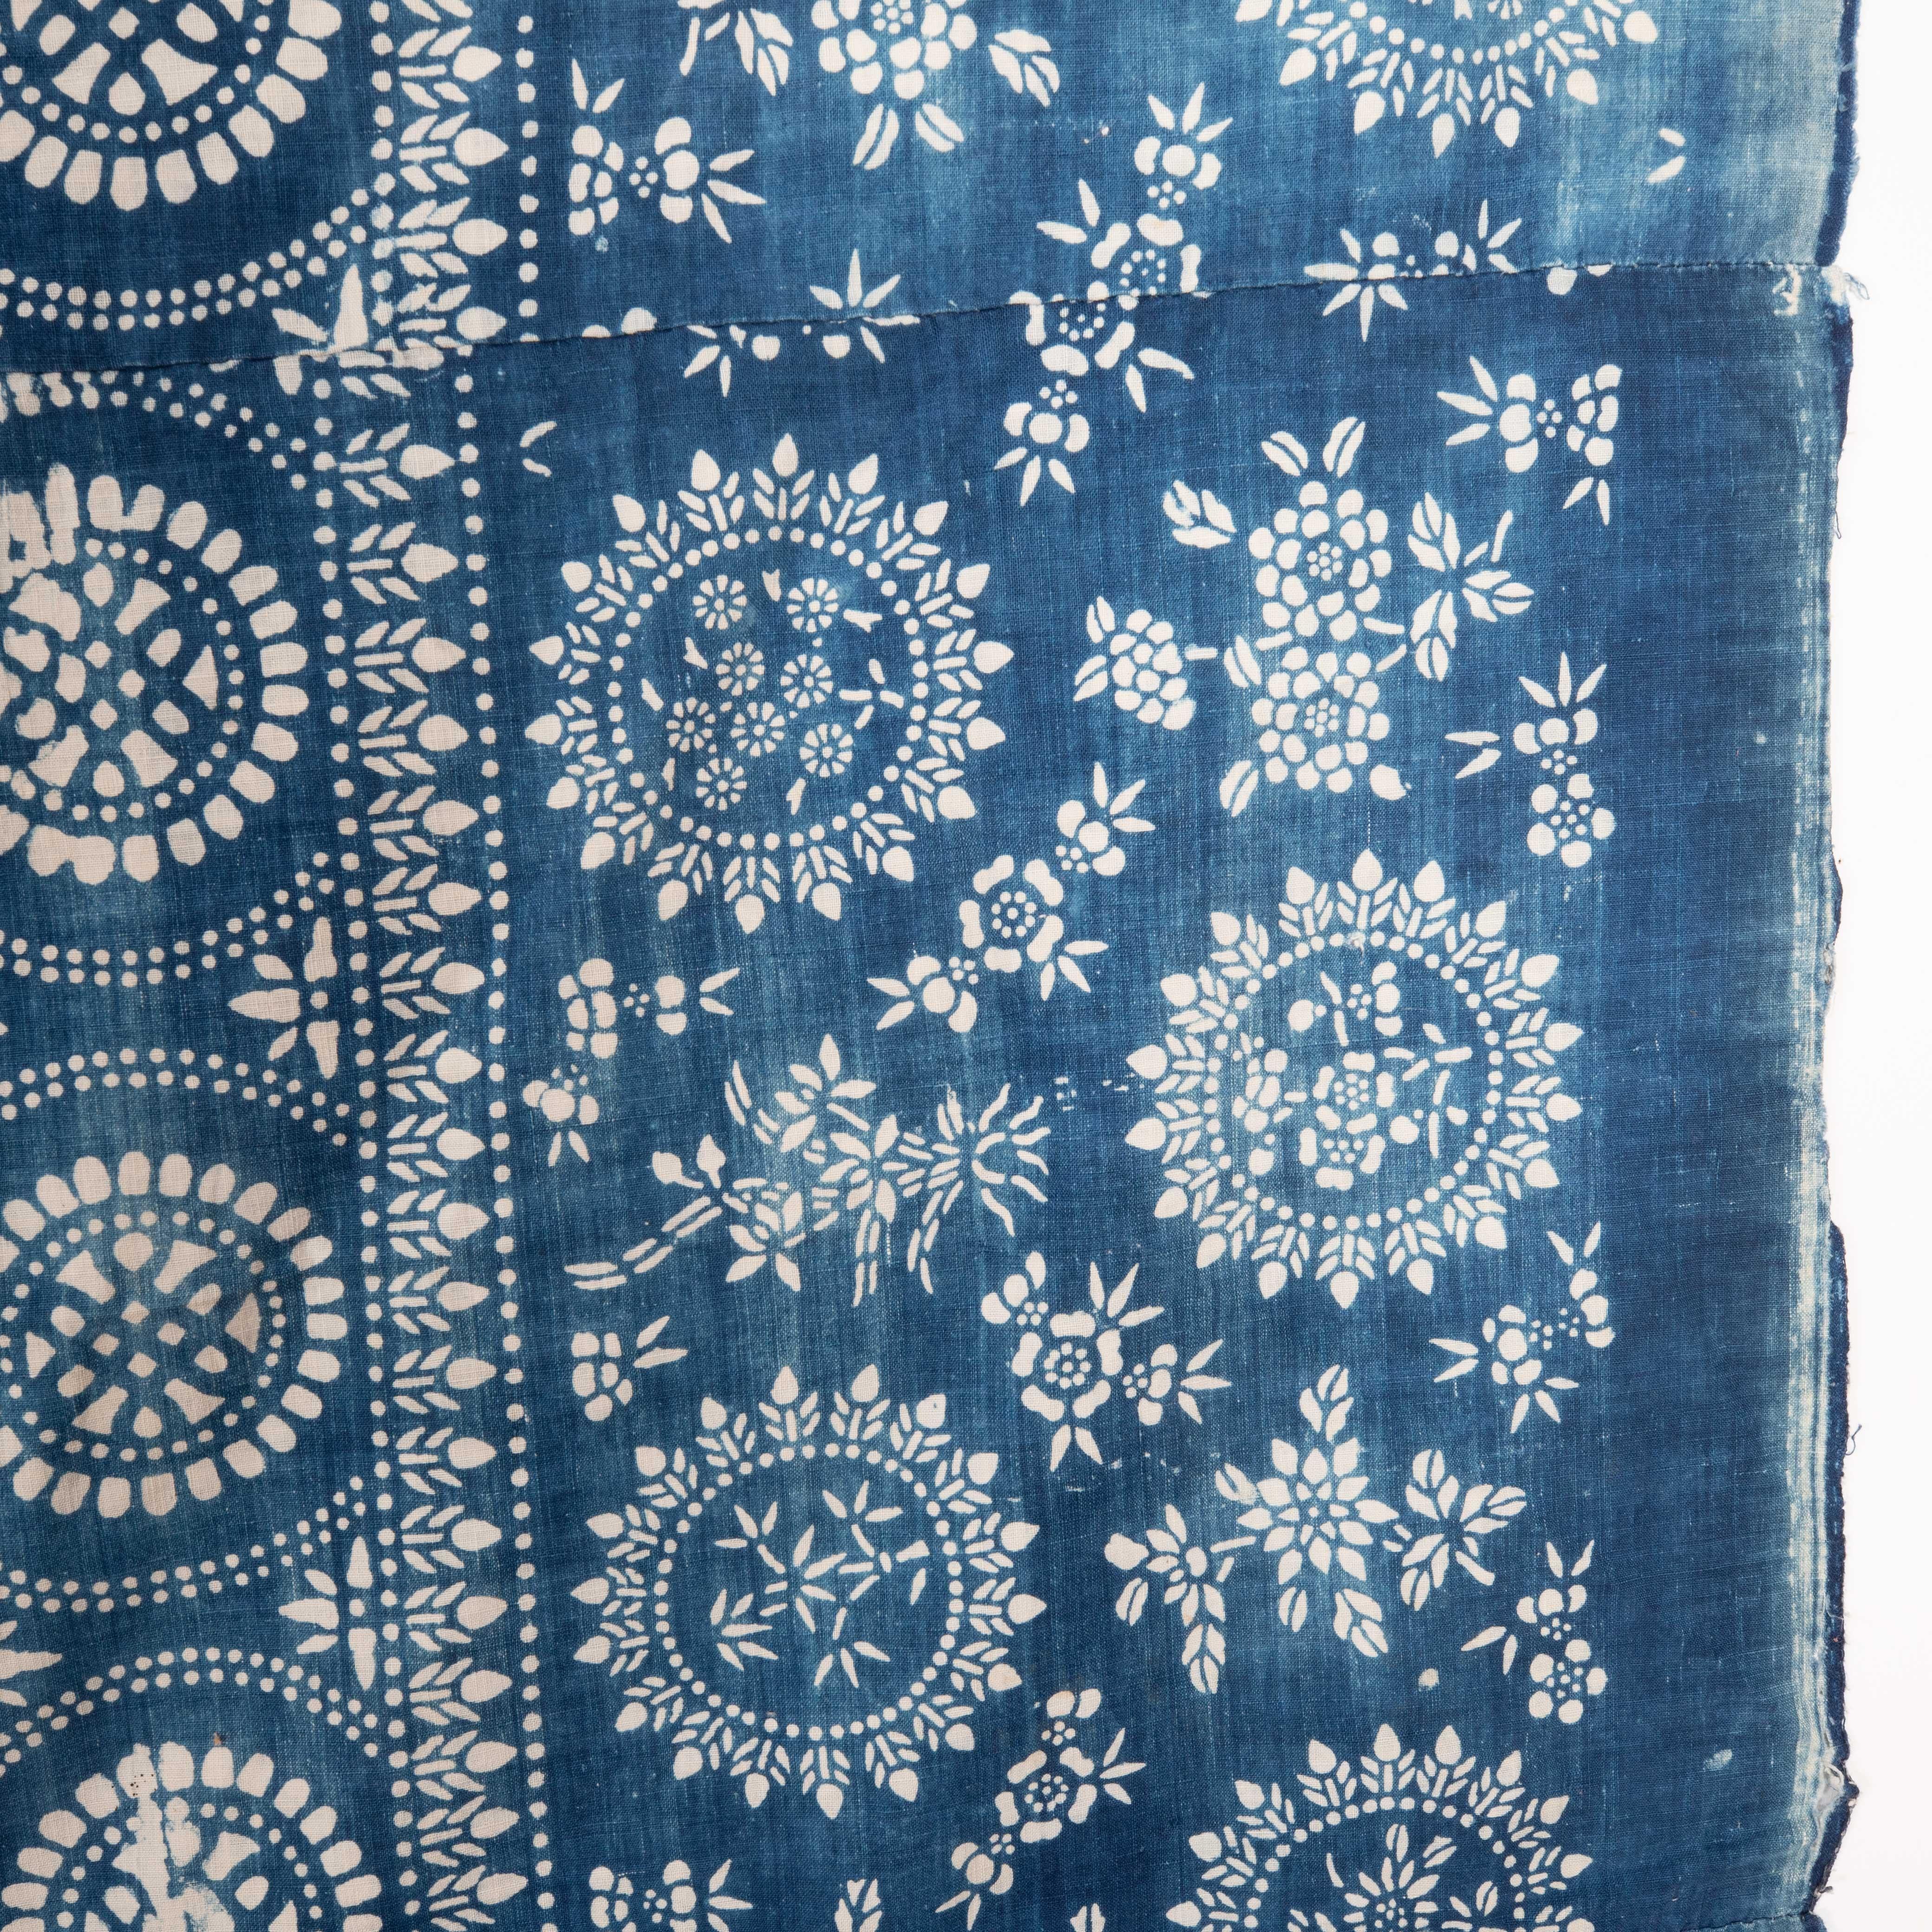 Cotton Vintage Chinese Indigo Batik Cover